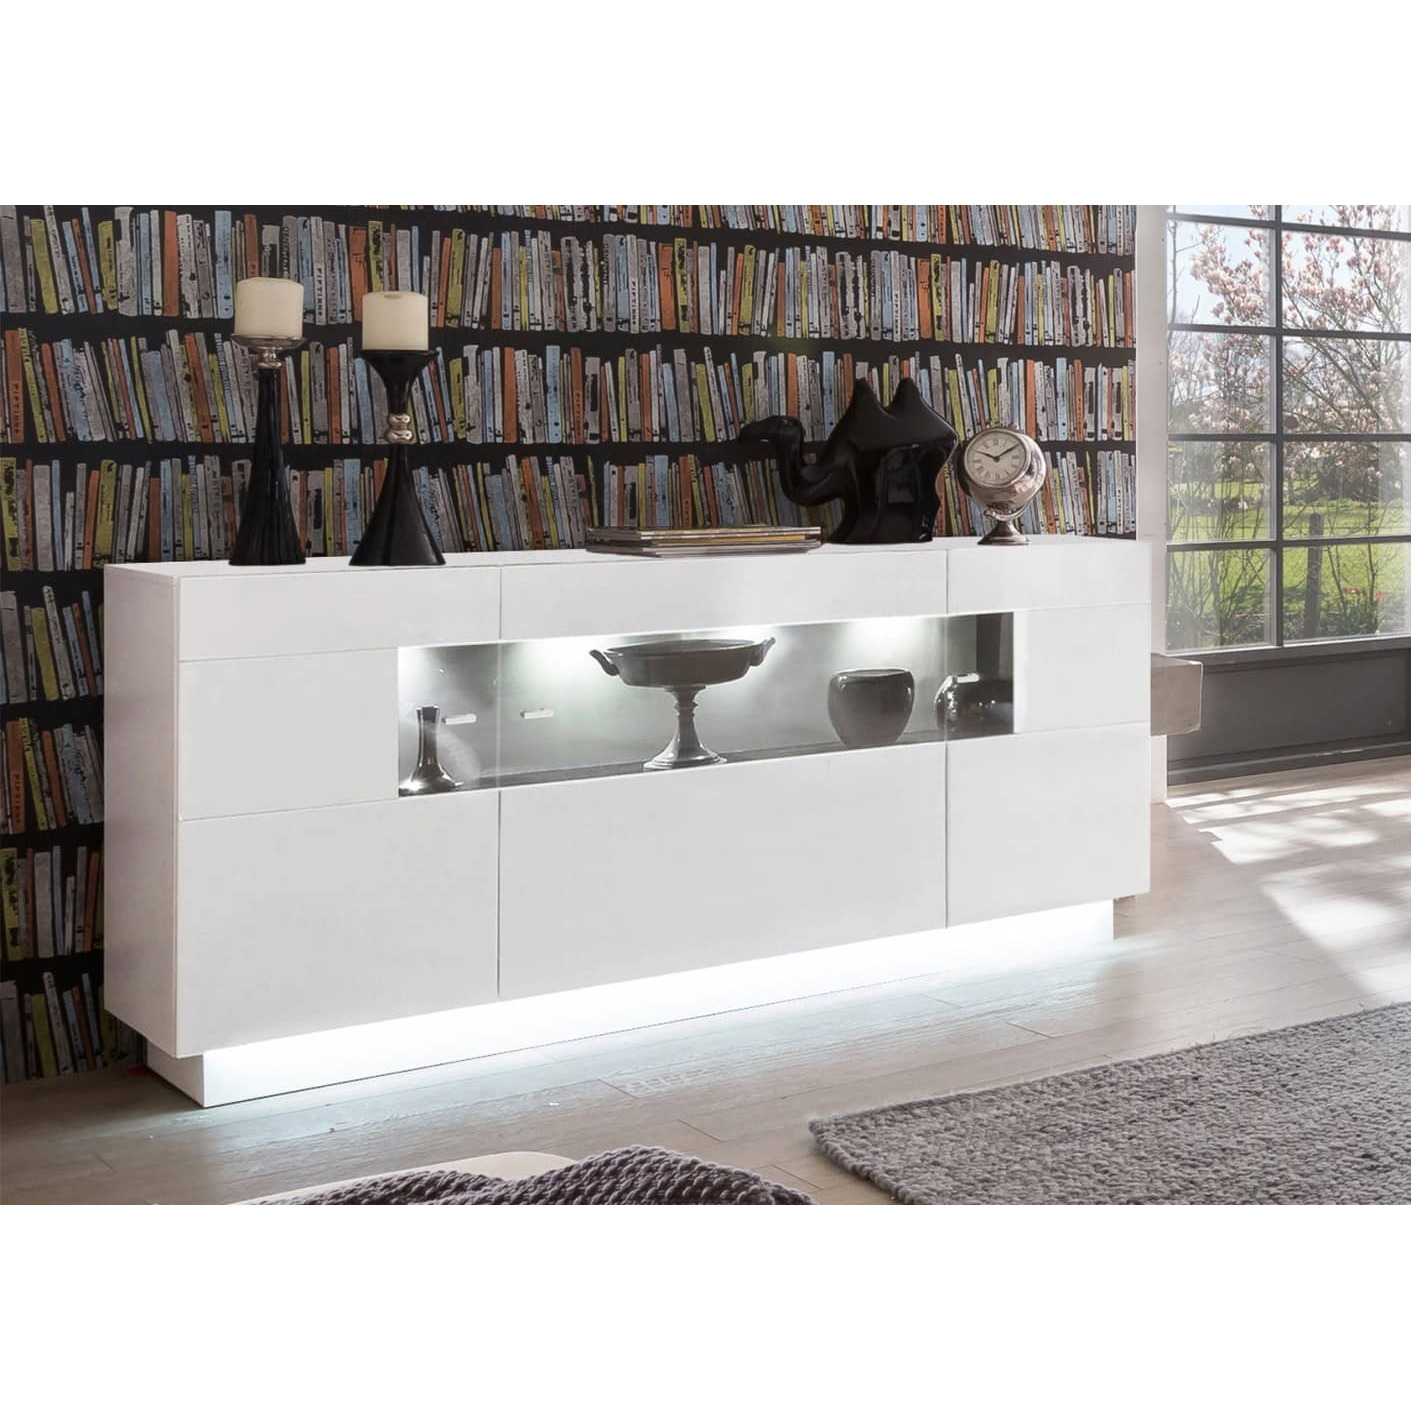 Sensis 84 Display Sideboard Cabinet - White Gloss 160cm - image 1